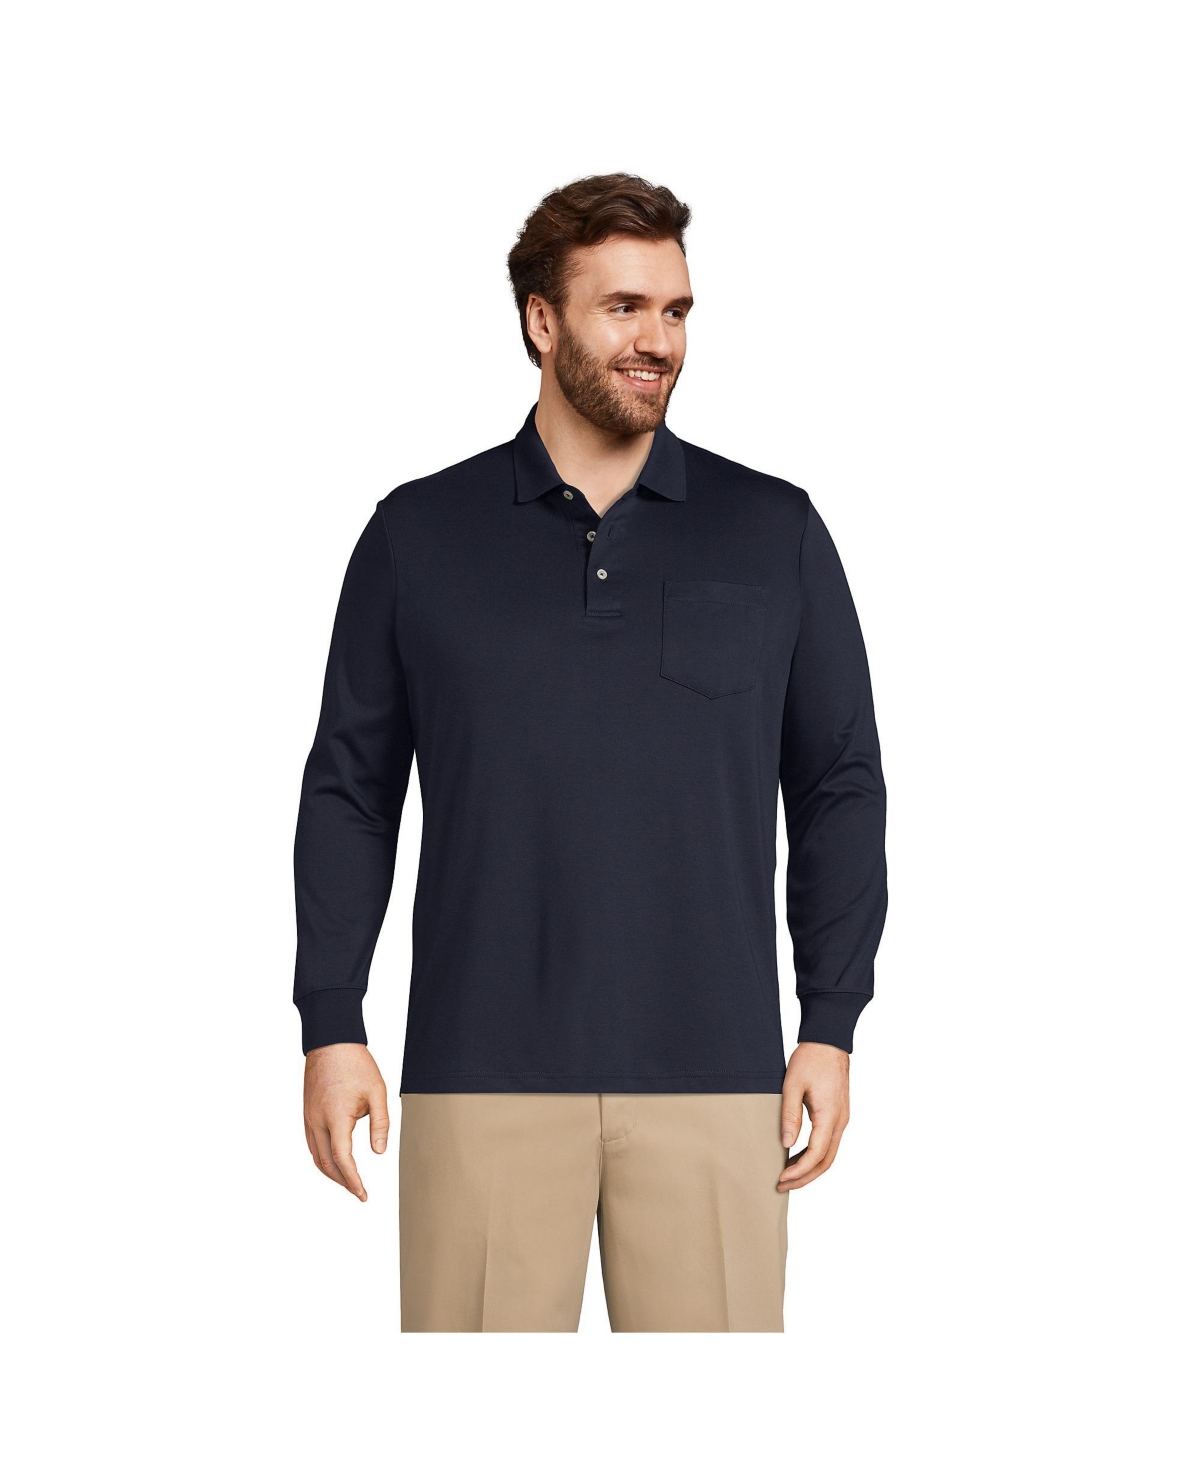 Big & Tall Long Sleeve Super Soft Supima Polo Shirt with Pocket - Teal shadow